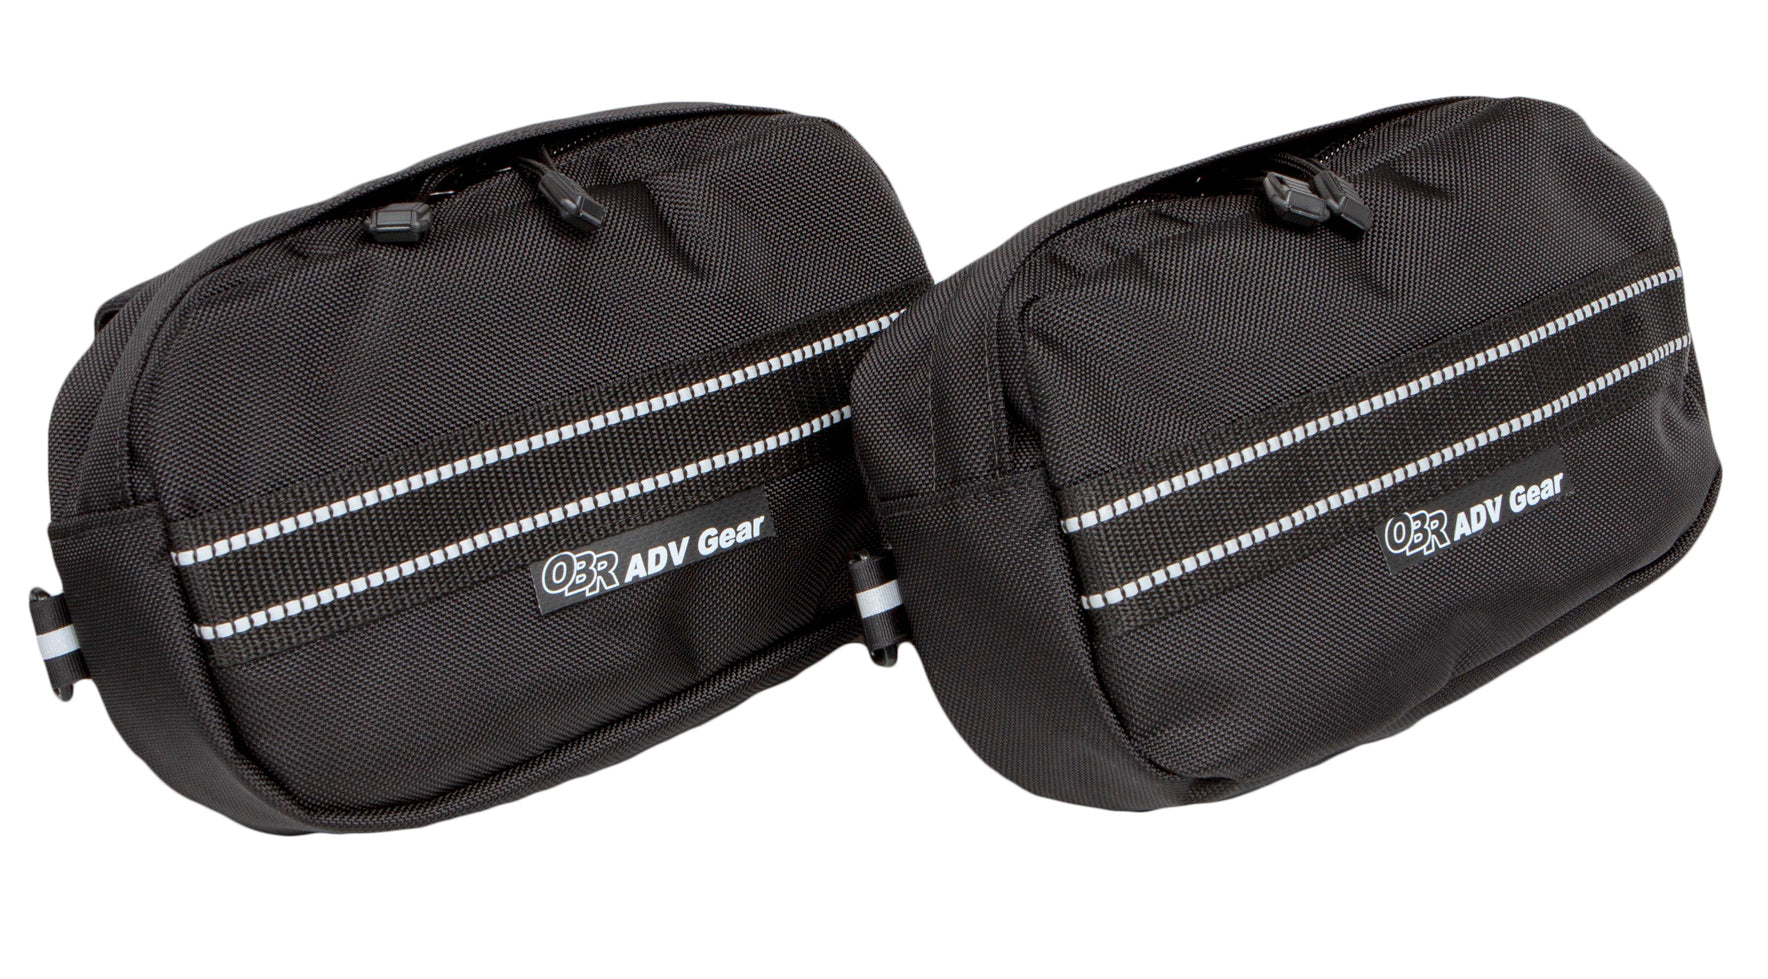 OBR ADV Gear Crash Bar Storage Bags: sold as a pair